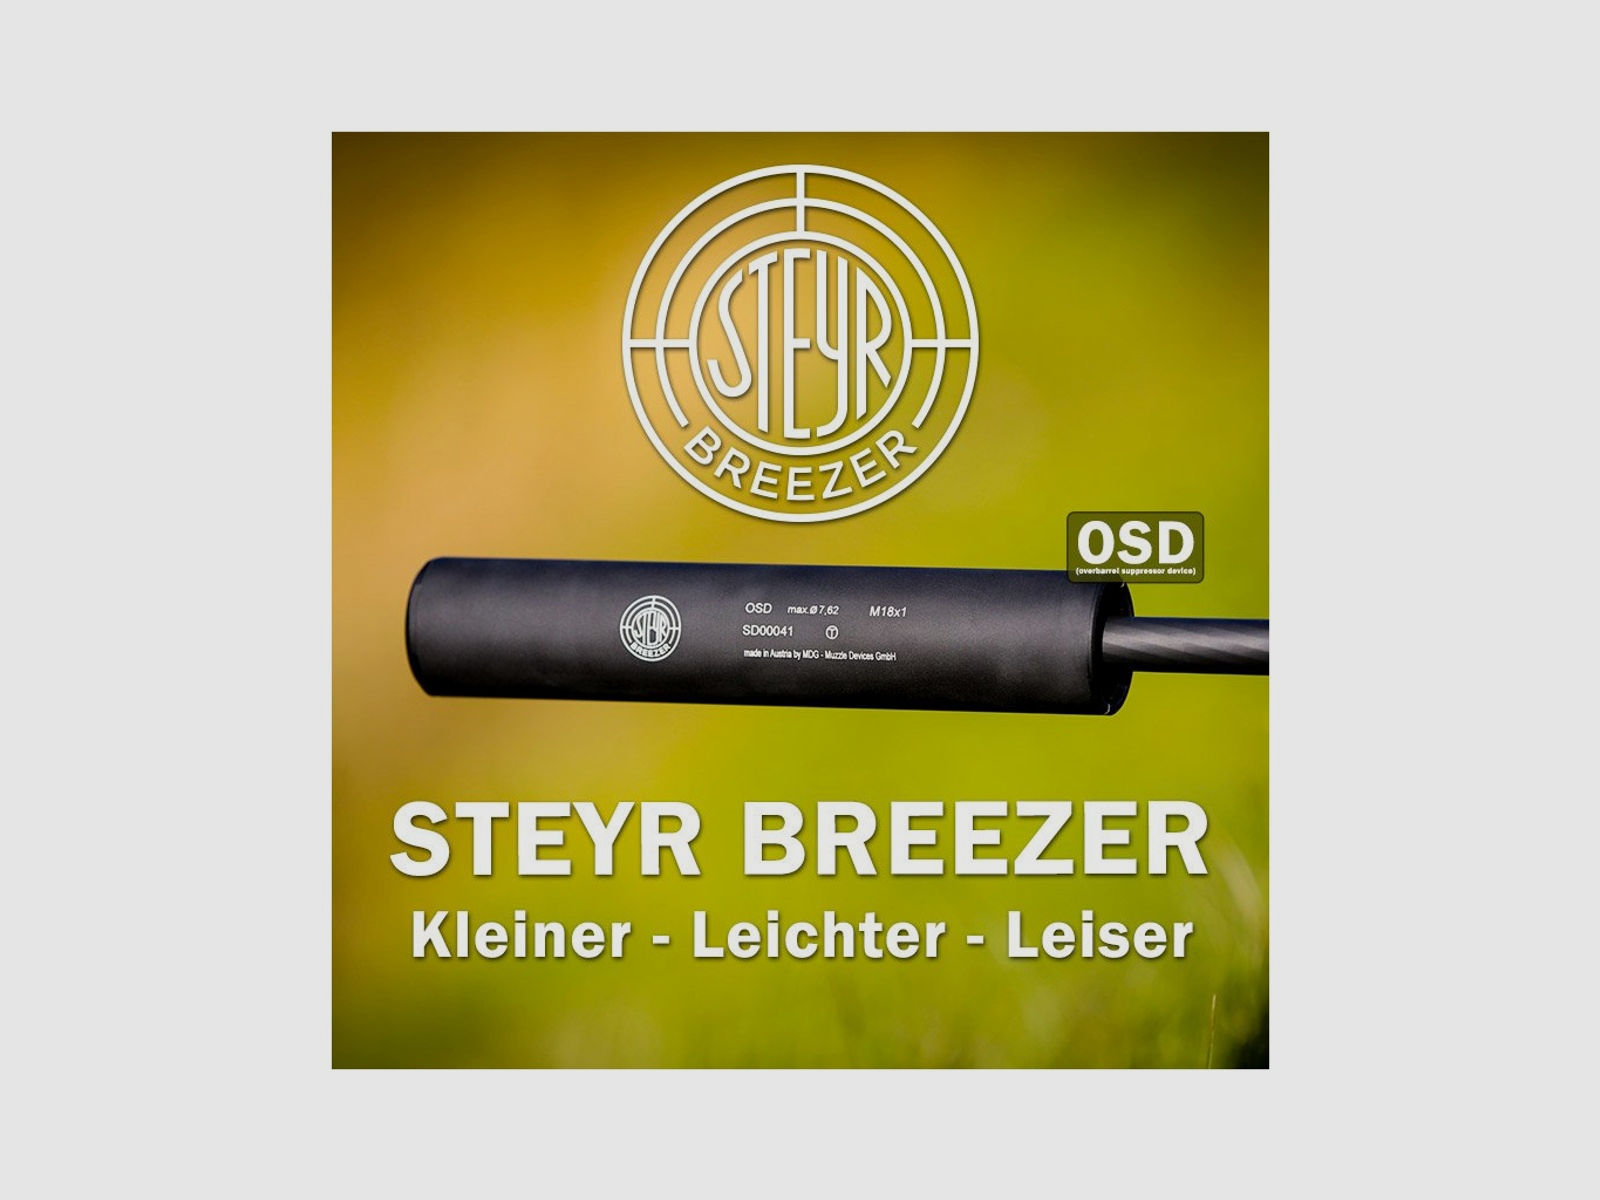 STEYR Breezer OSD HB